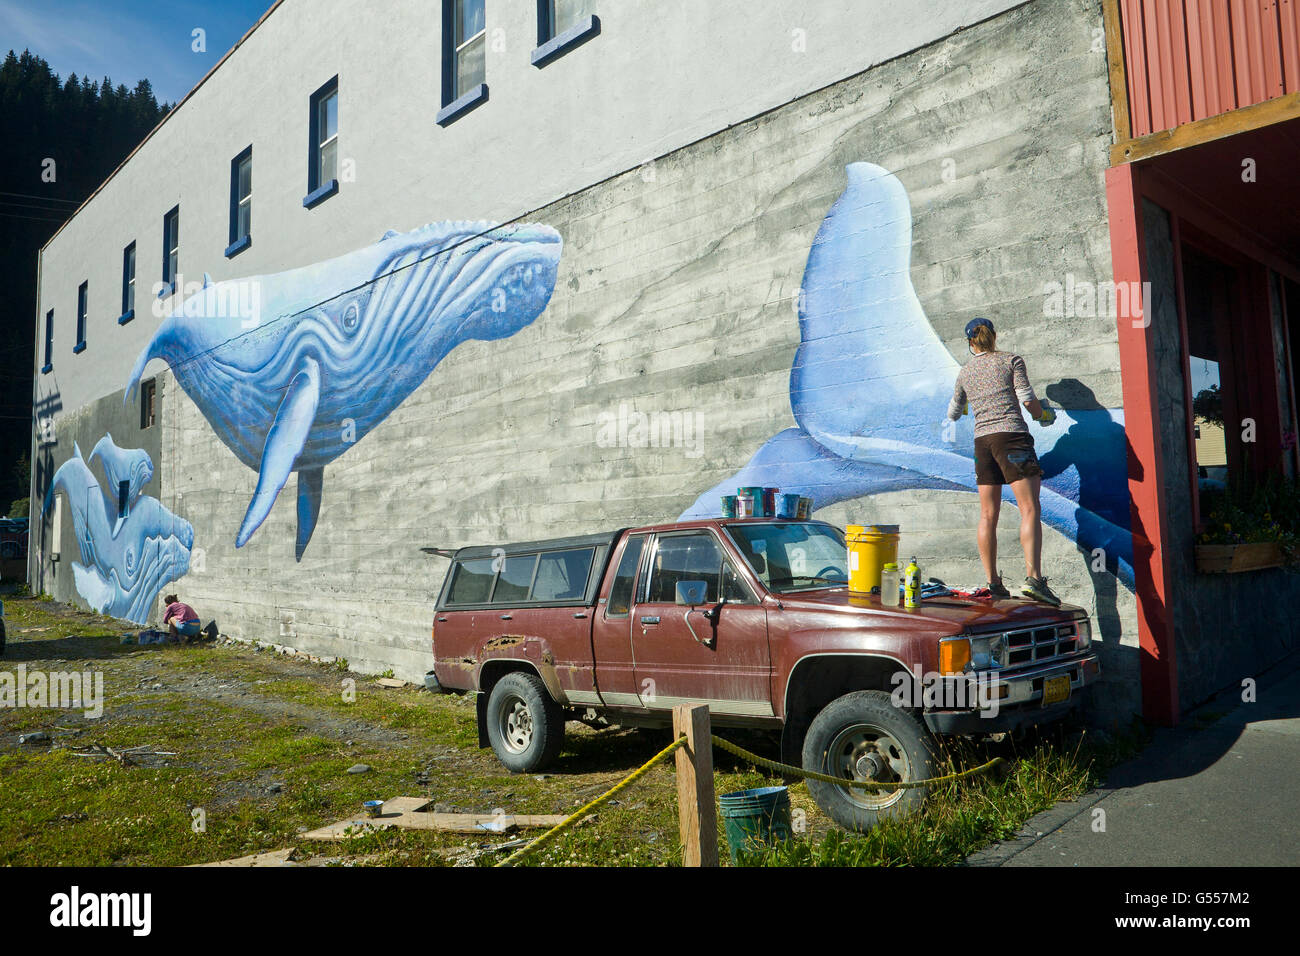 Justine artiste peinture Pechuzal ses murales 'Sea-ward lié' illustrant les baleines à bosse (Megaptera novaeangliae), Seward, Alaska Banque D'Images